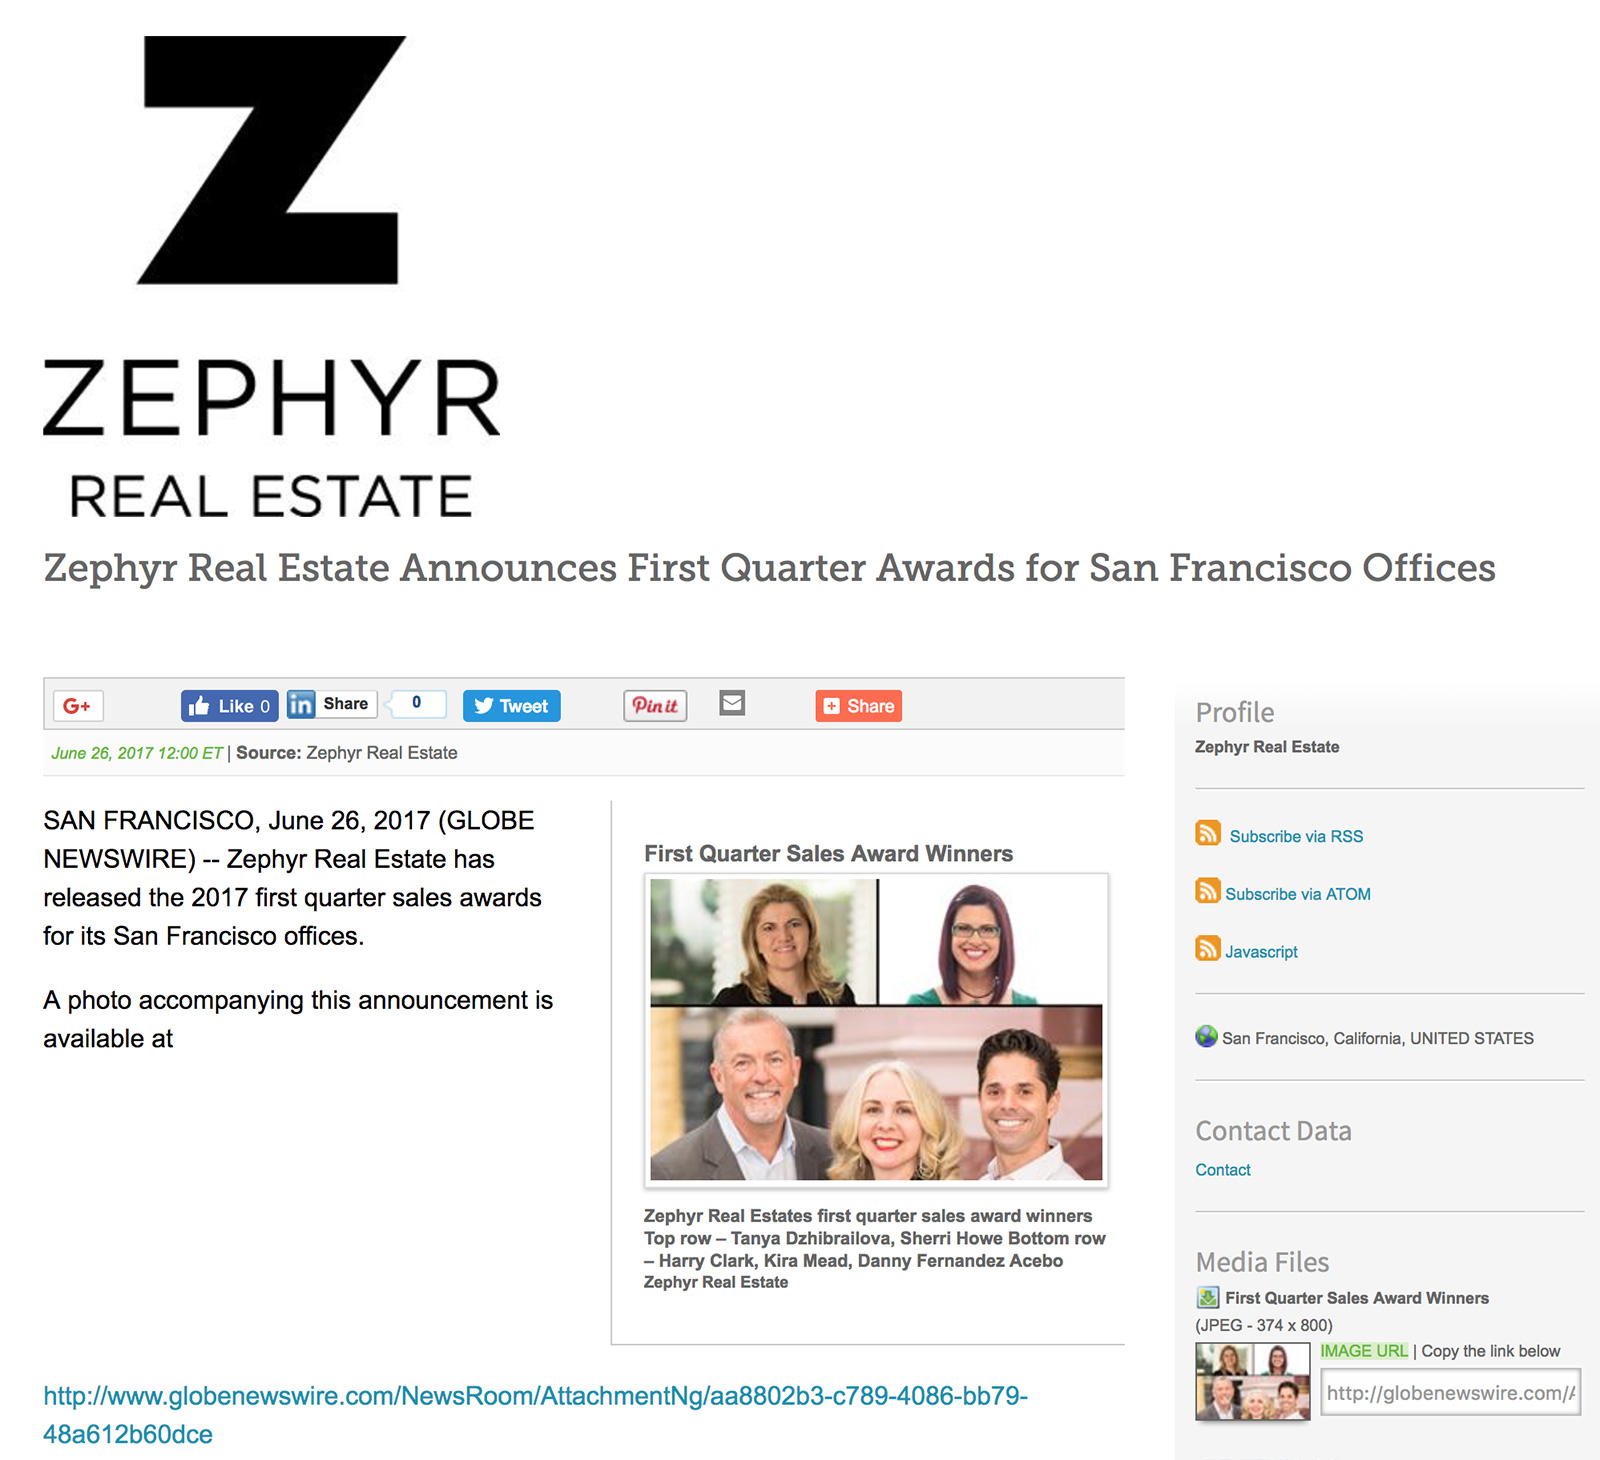 Zephyr Real Estate Announces First Quarter Awards for San Francisco Offices